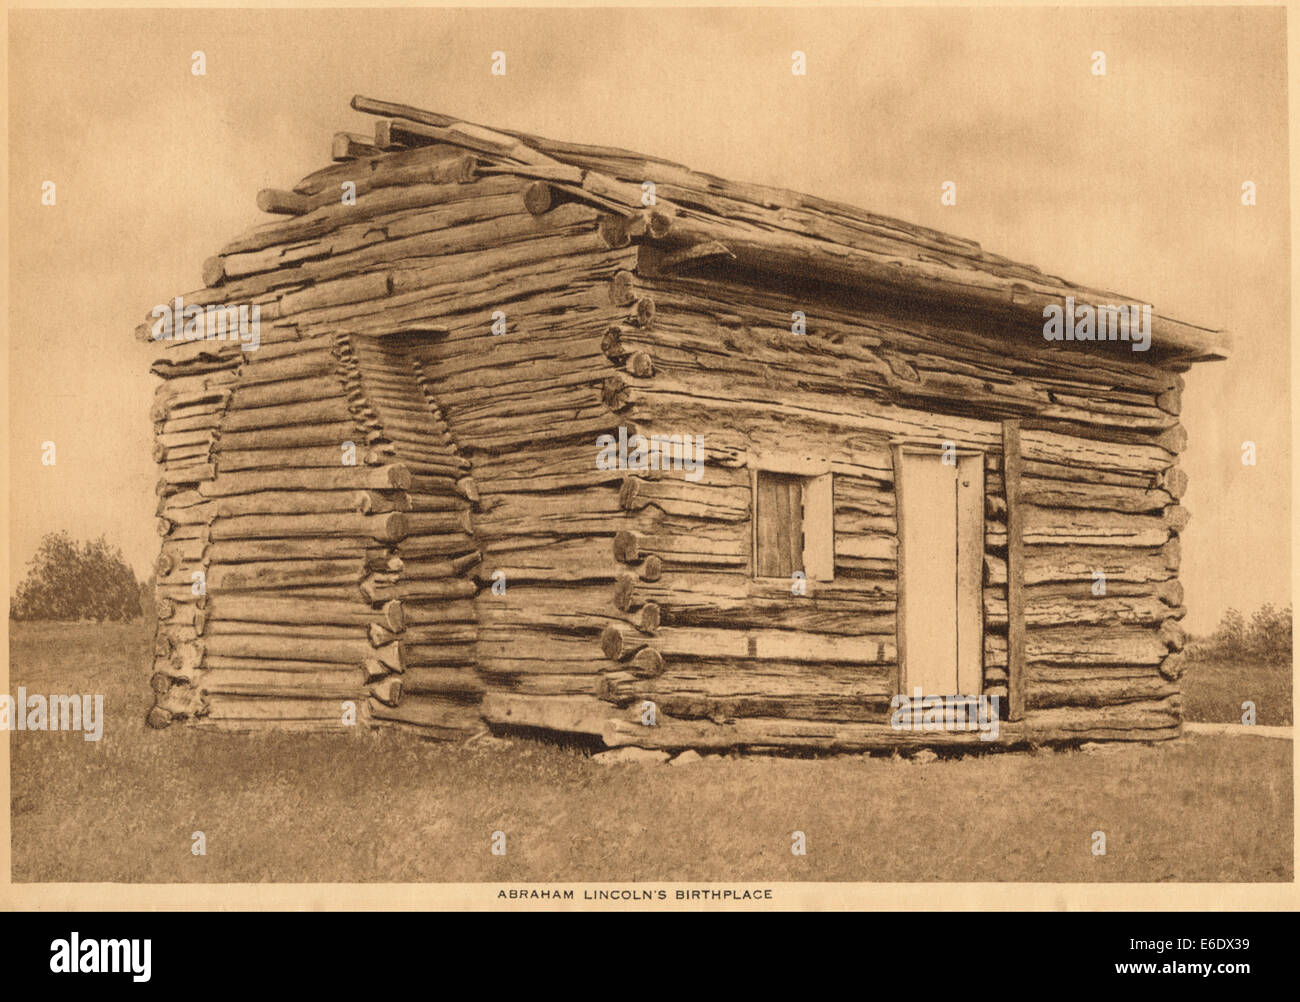 U.S. President Abraham Lincoln's Birthplace, Rock Spring Farm, Kentucky, USA, Illustrated Replica, 1914 Stock Photo